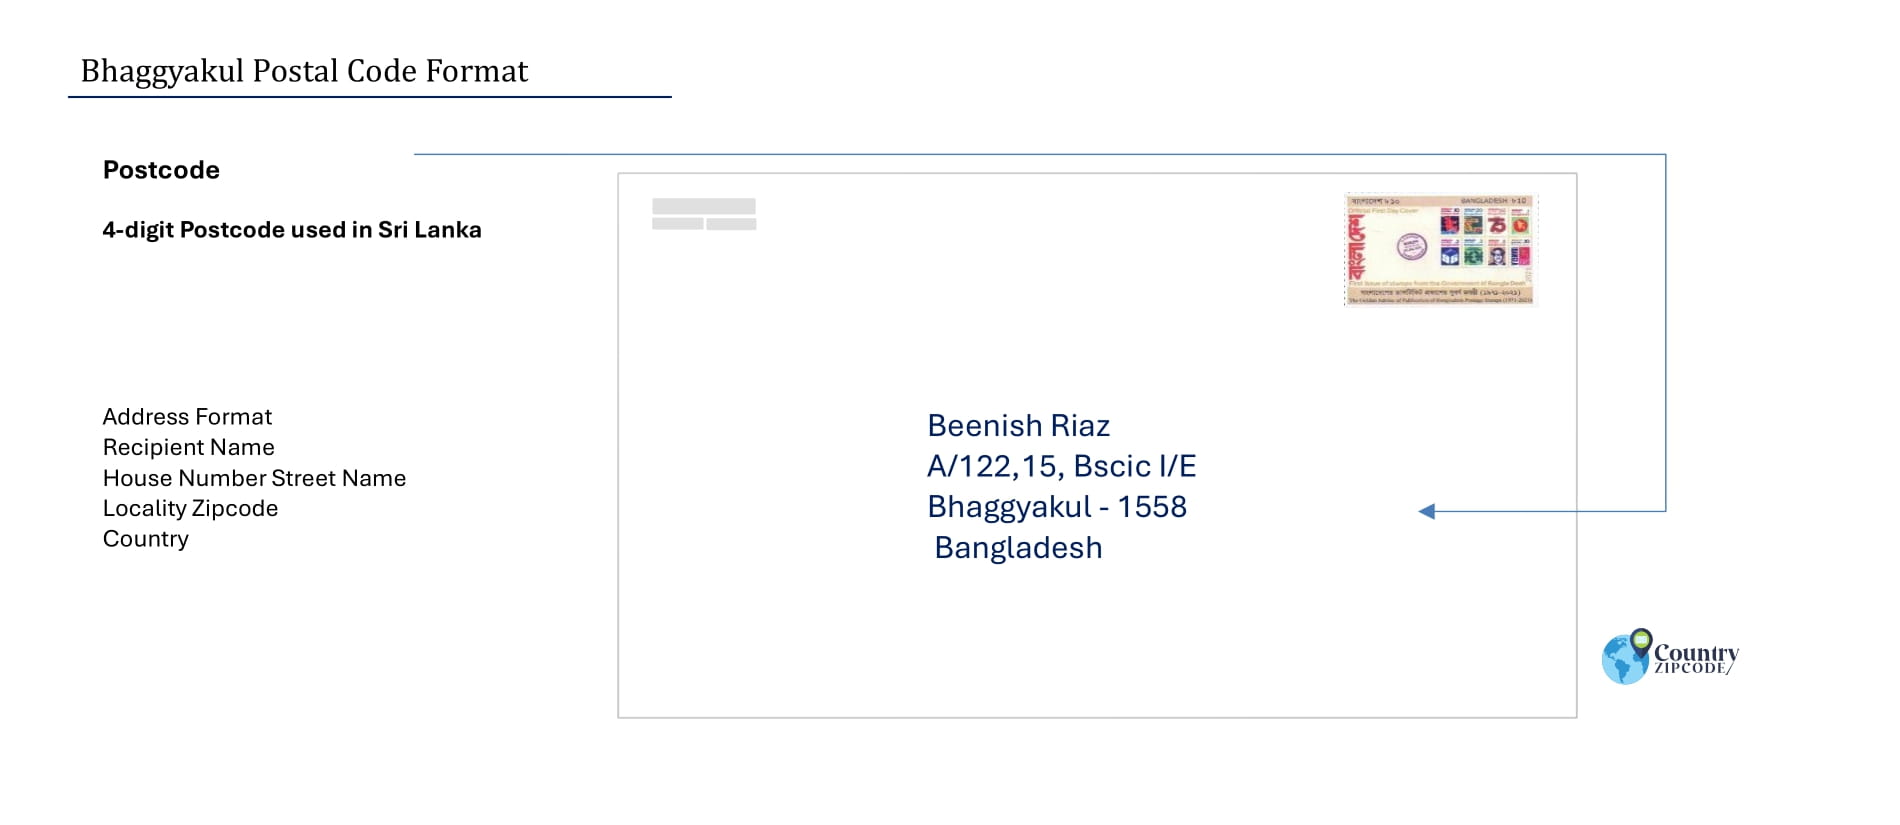 Bhaggyakul Postal code format